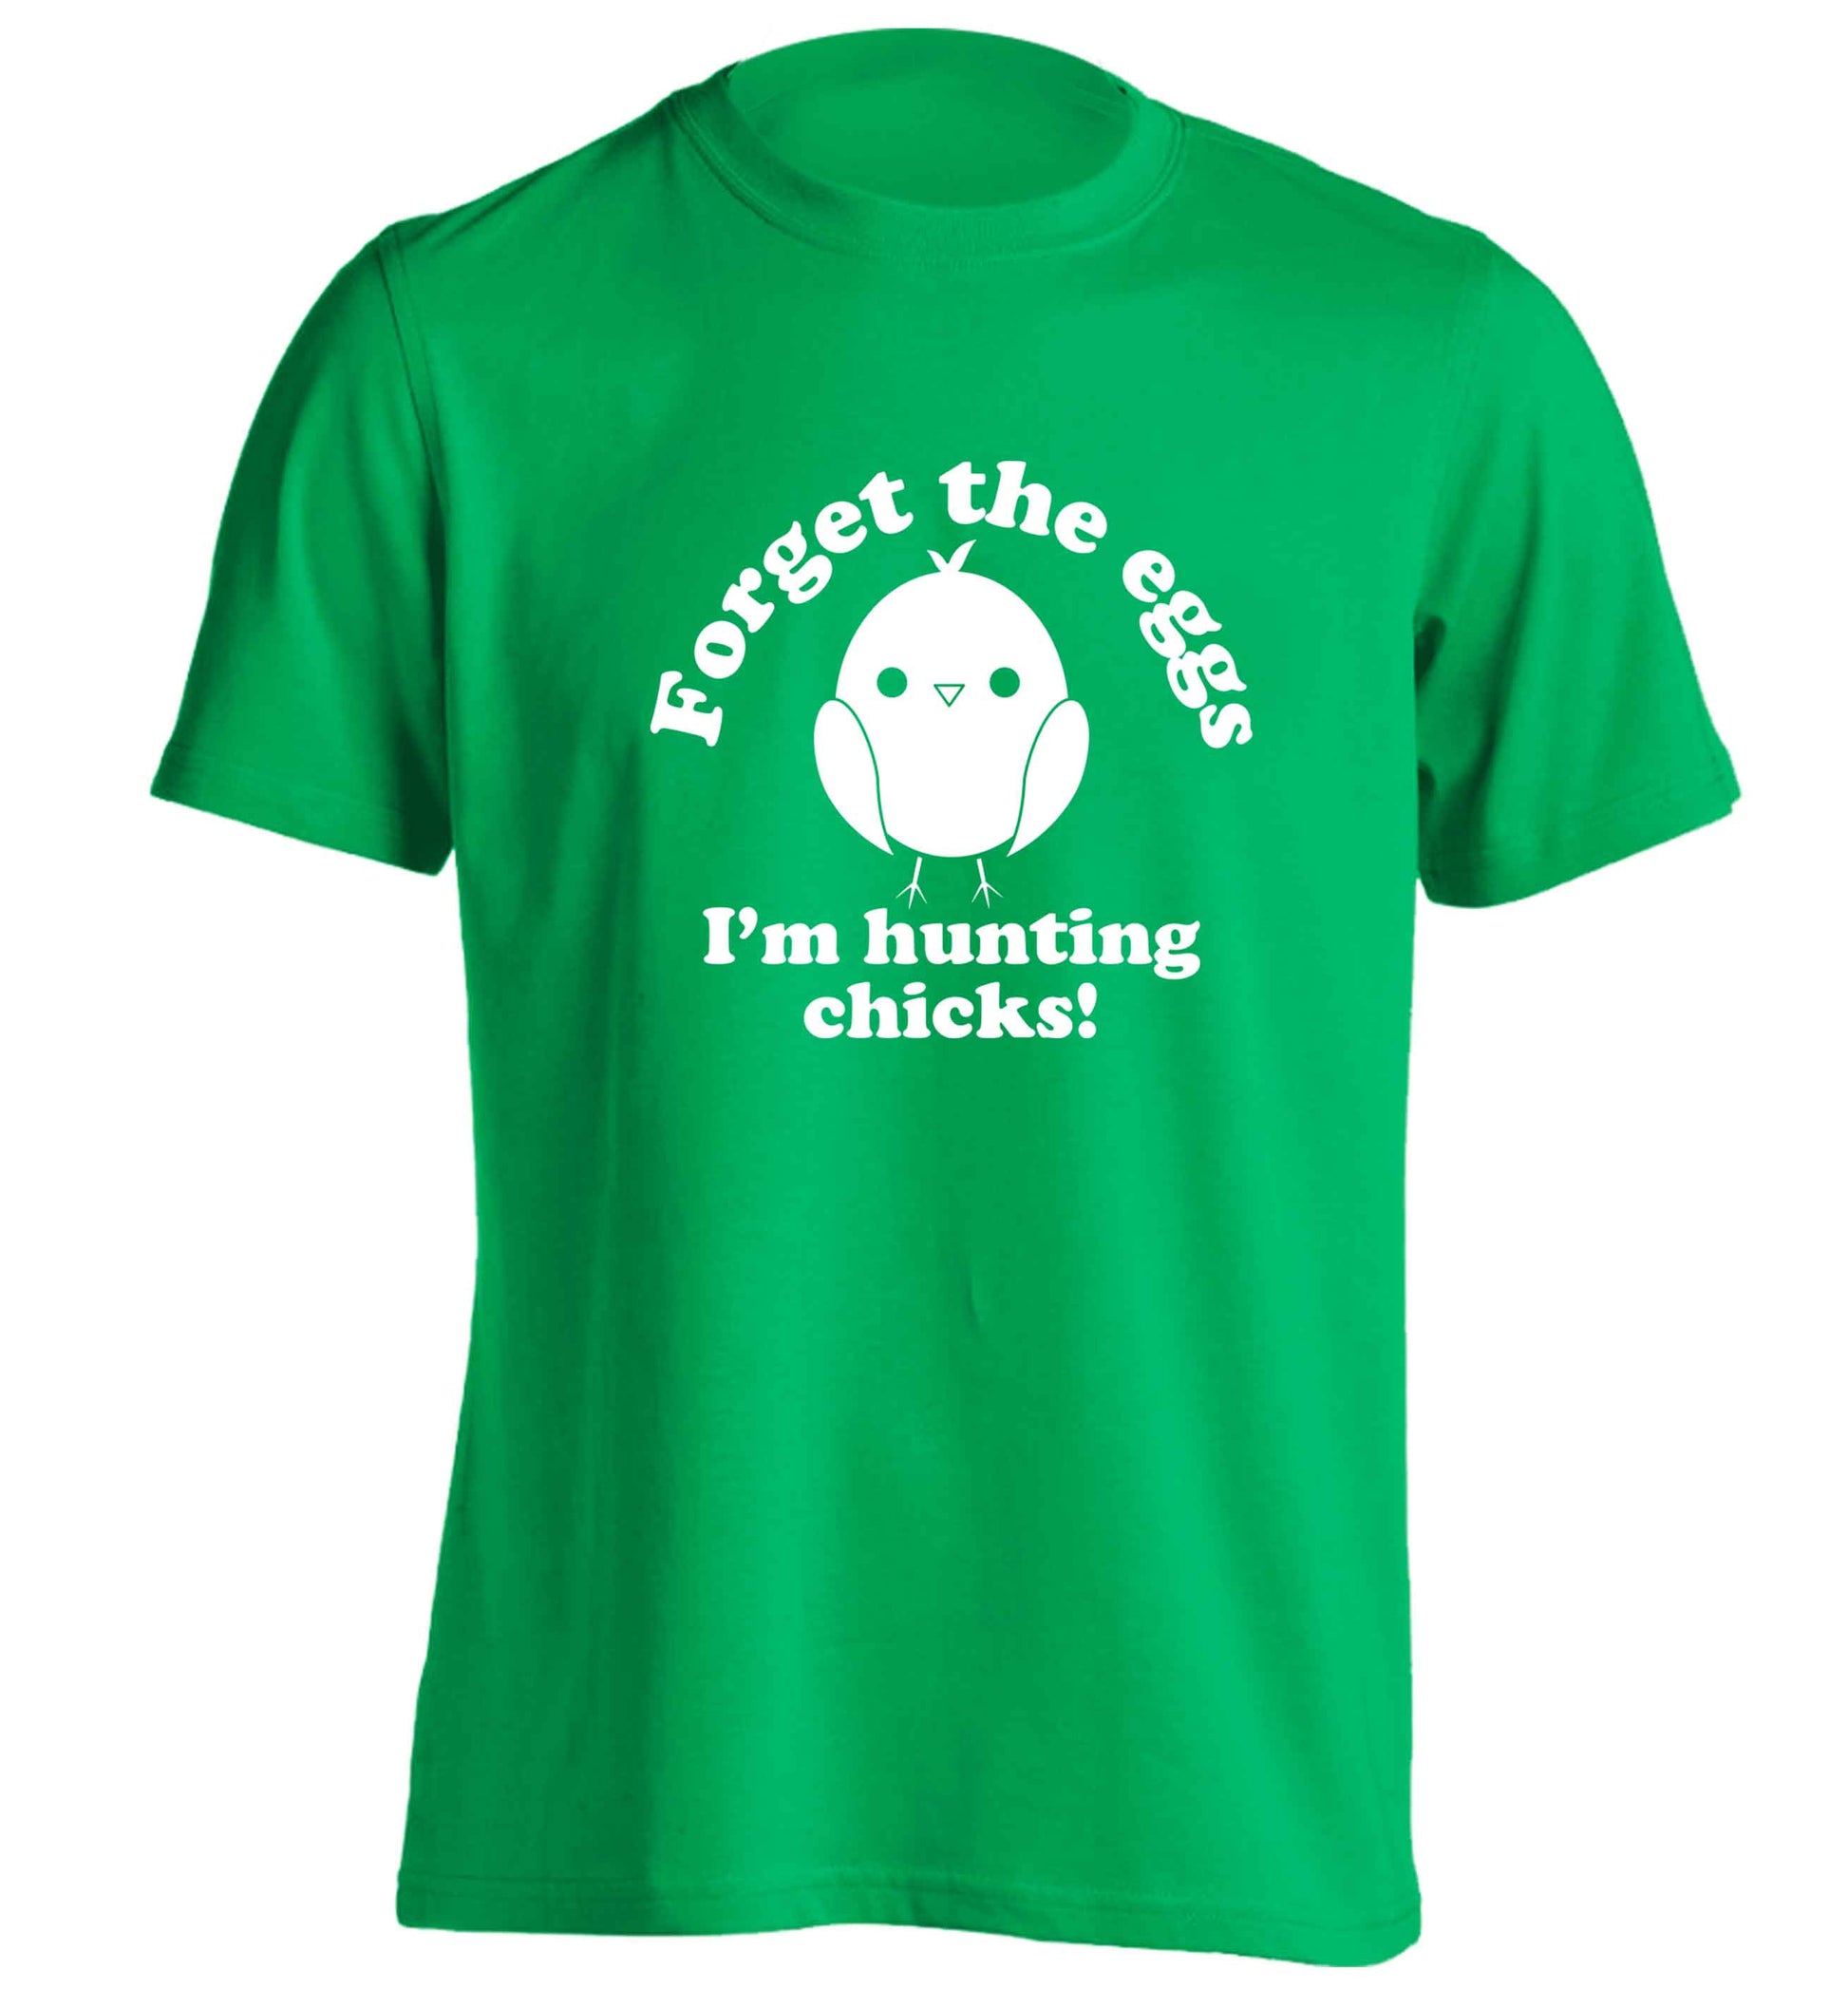 Forget the eggs I'm hunting chicks! adults unisex green Tshirt 2XL